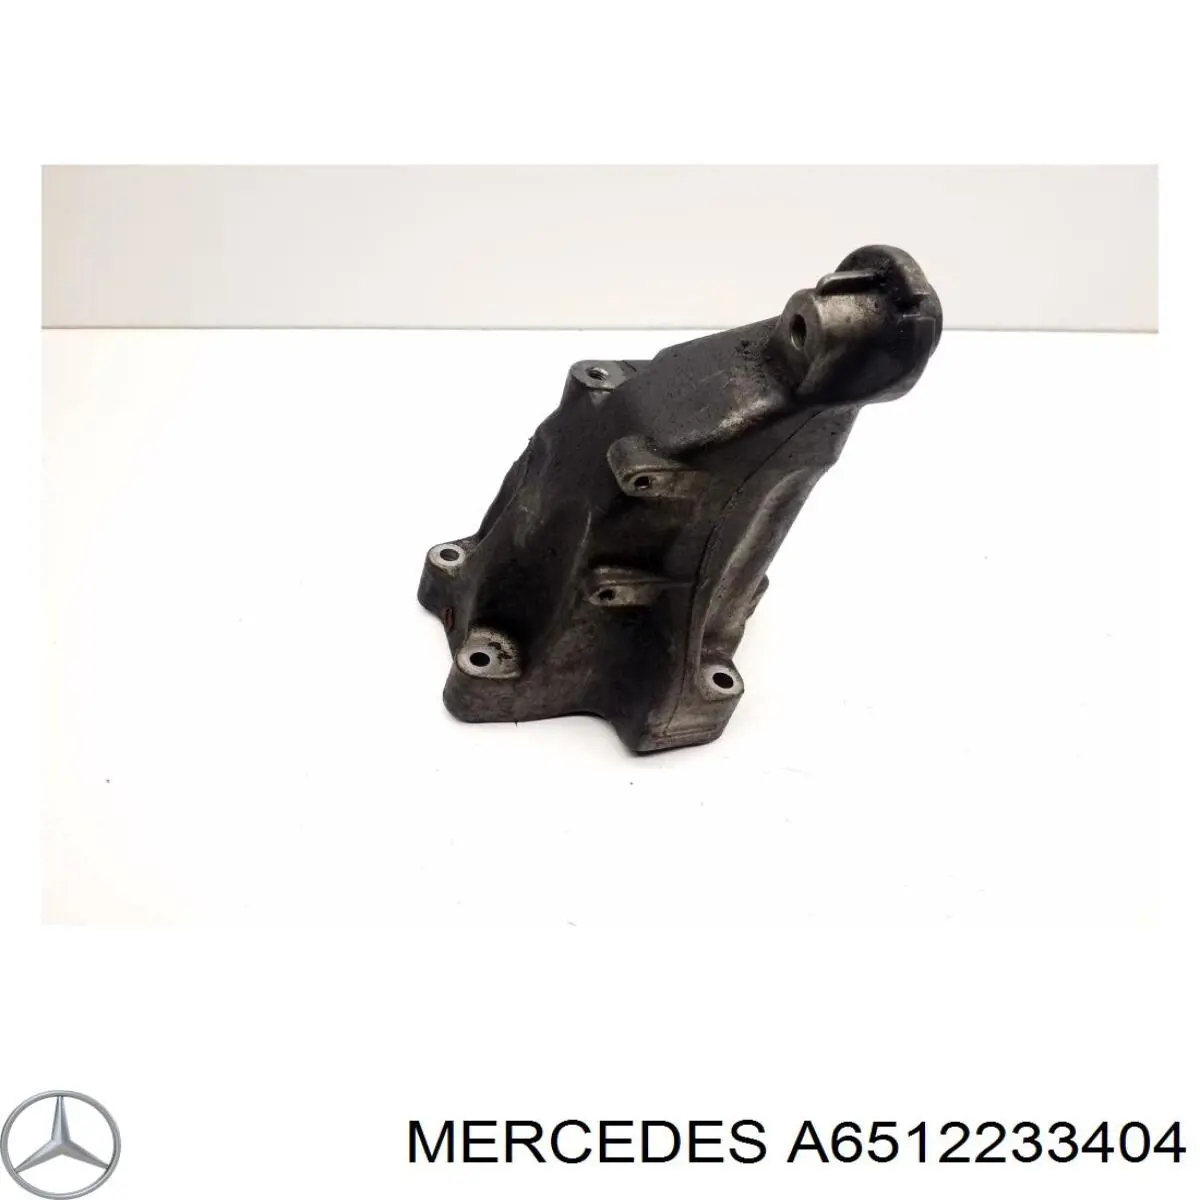 Soporte para taco de motor derecho Mercedes A6512233404